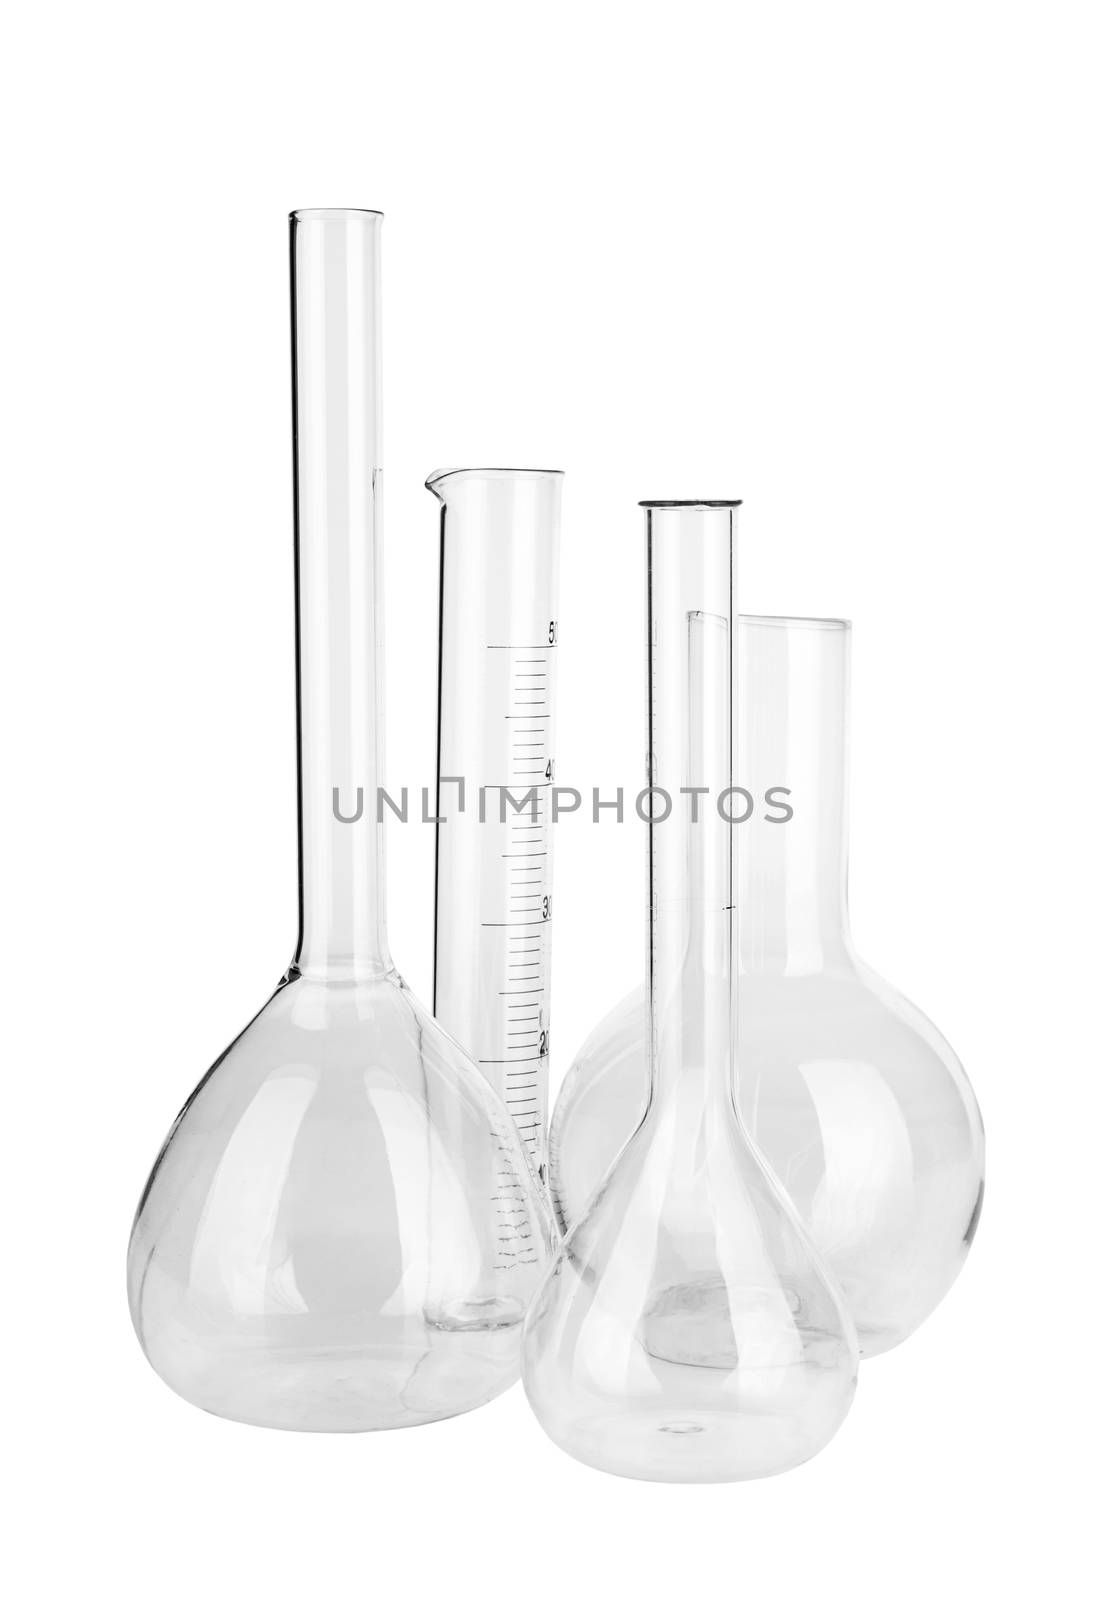 laboratory glassware by pioneer111